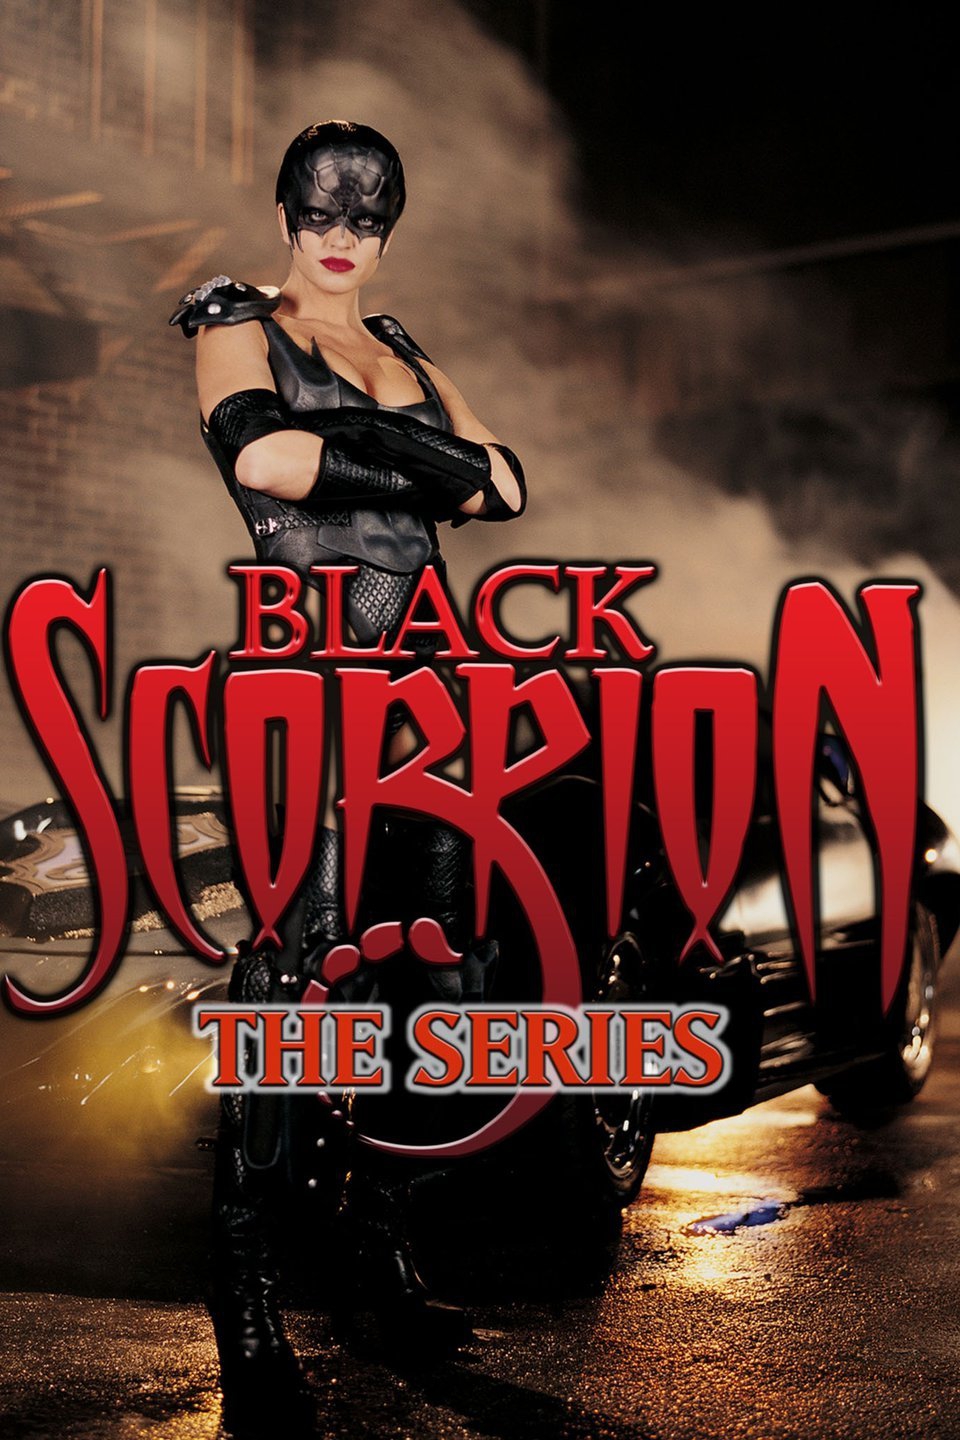 Watch Black Scorpion (2001) Online for Free | The Roku Channel | Roku